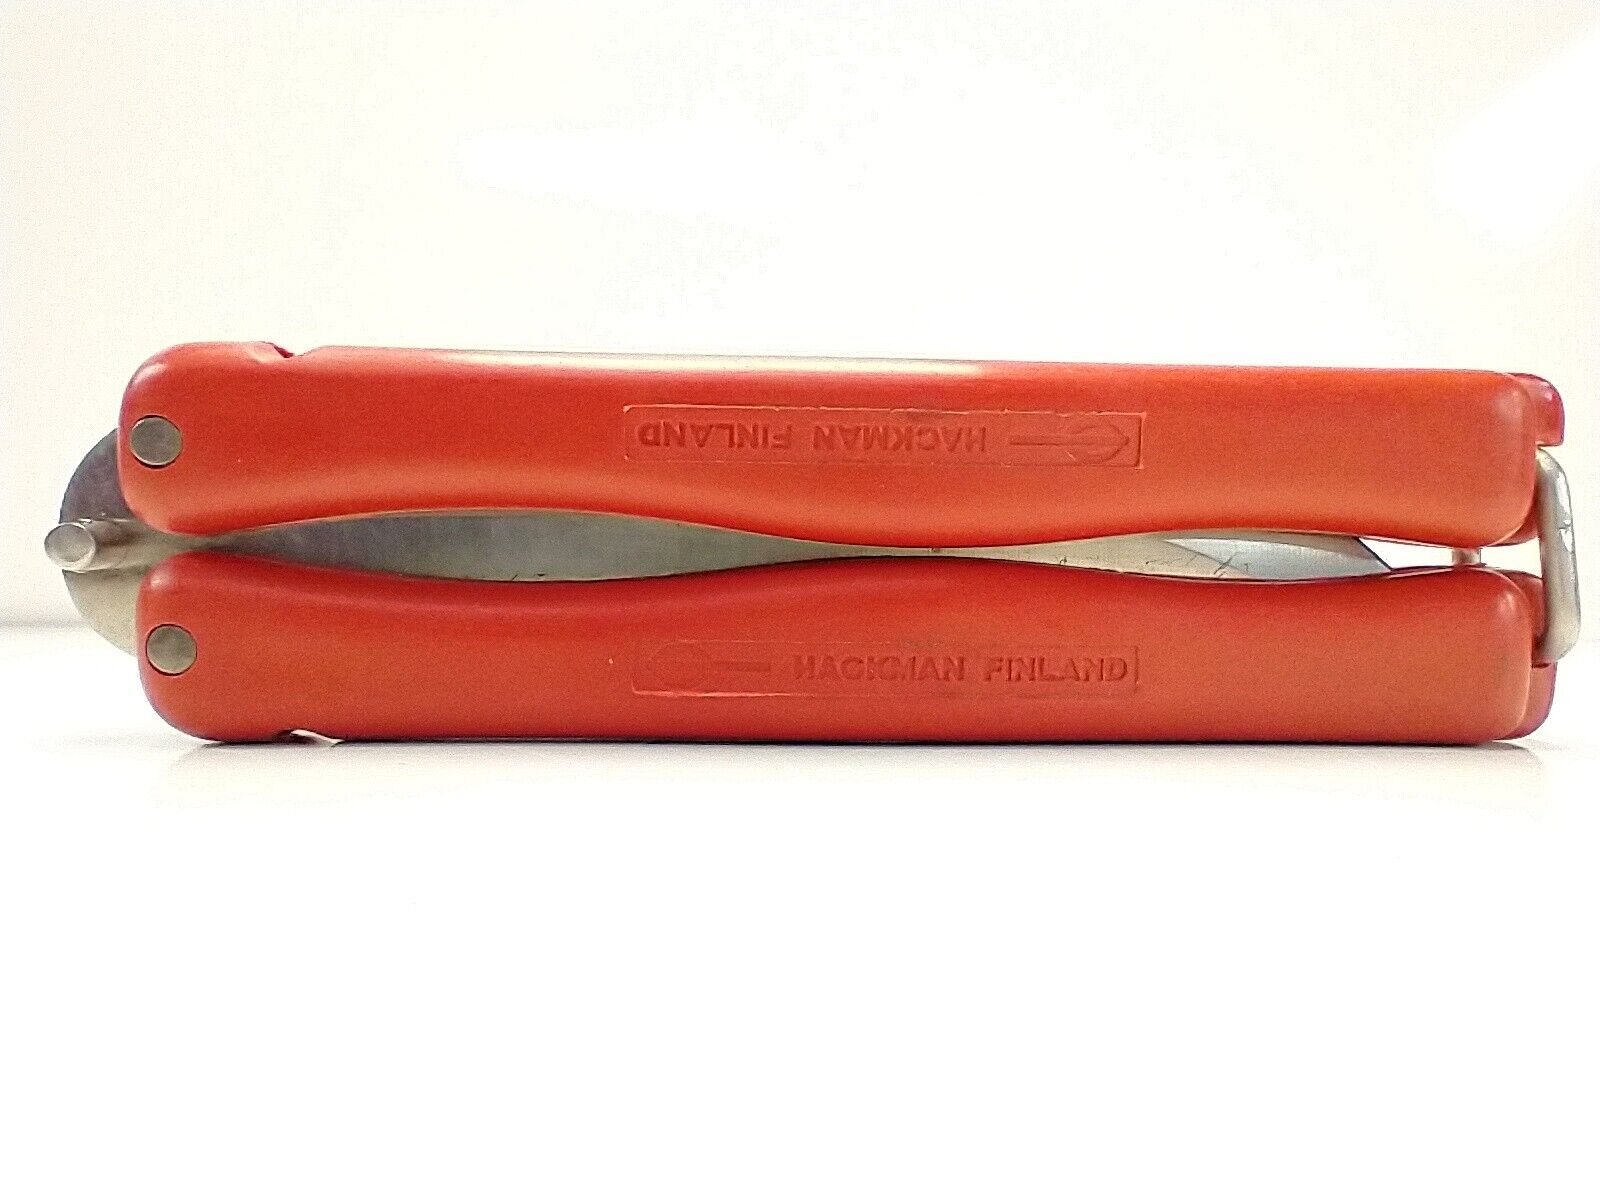 Vintage Hackman Finland Knife, Red Plastic Handles.